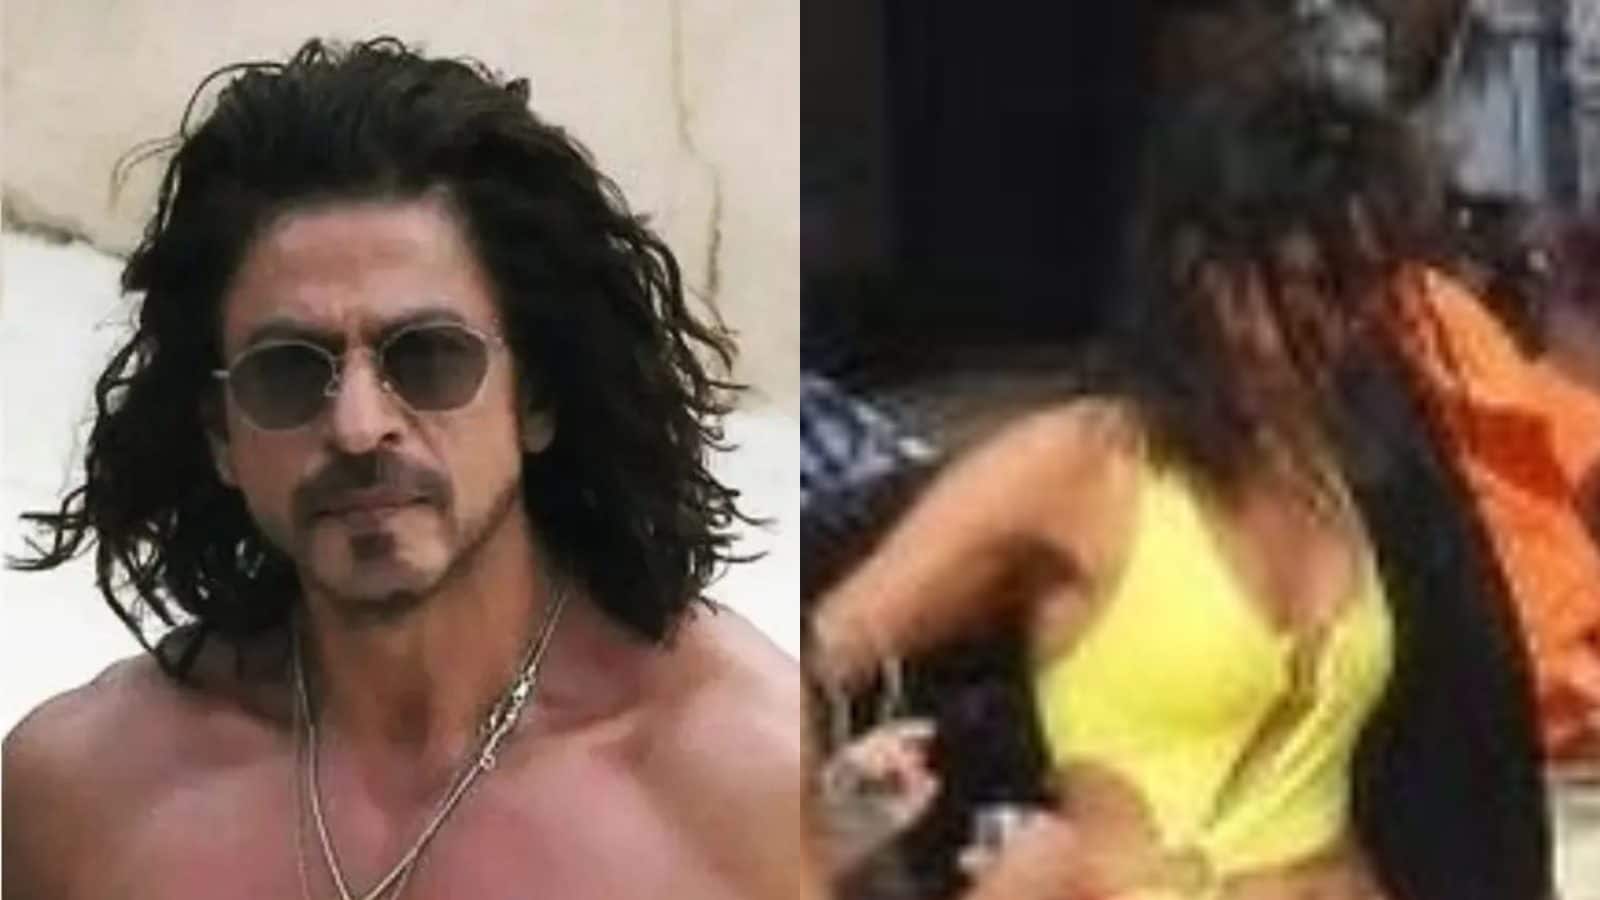 Shah Rukh Khan’s Rugged Look From Pathaan Leaks, More Pics Of Deepika Padukone In Bikini Surface